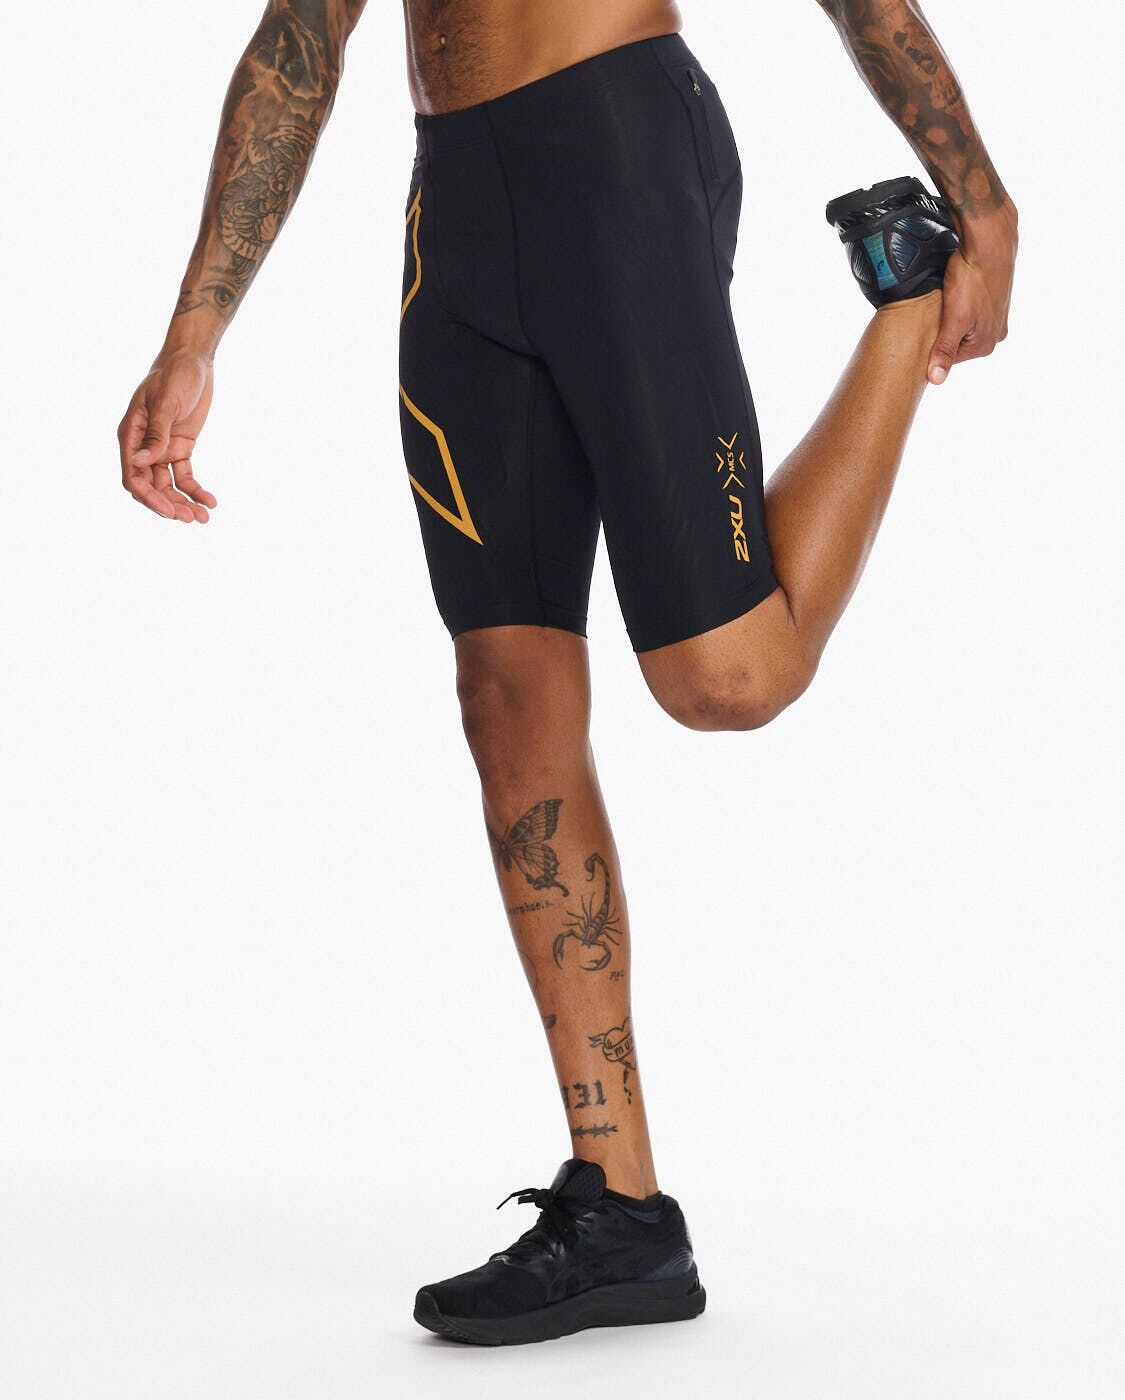 2XU South Africa - Men's Light Speed Compression Shorts - Black/Turmeric Reflective